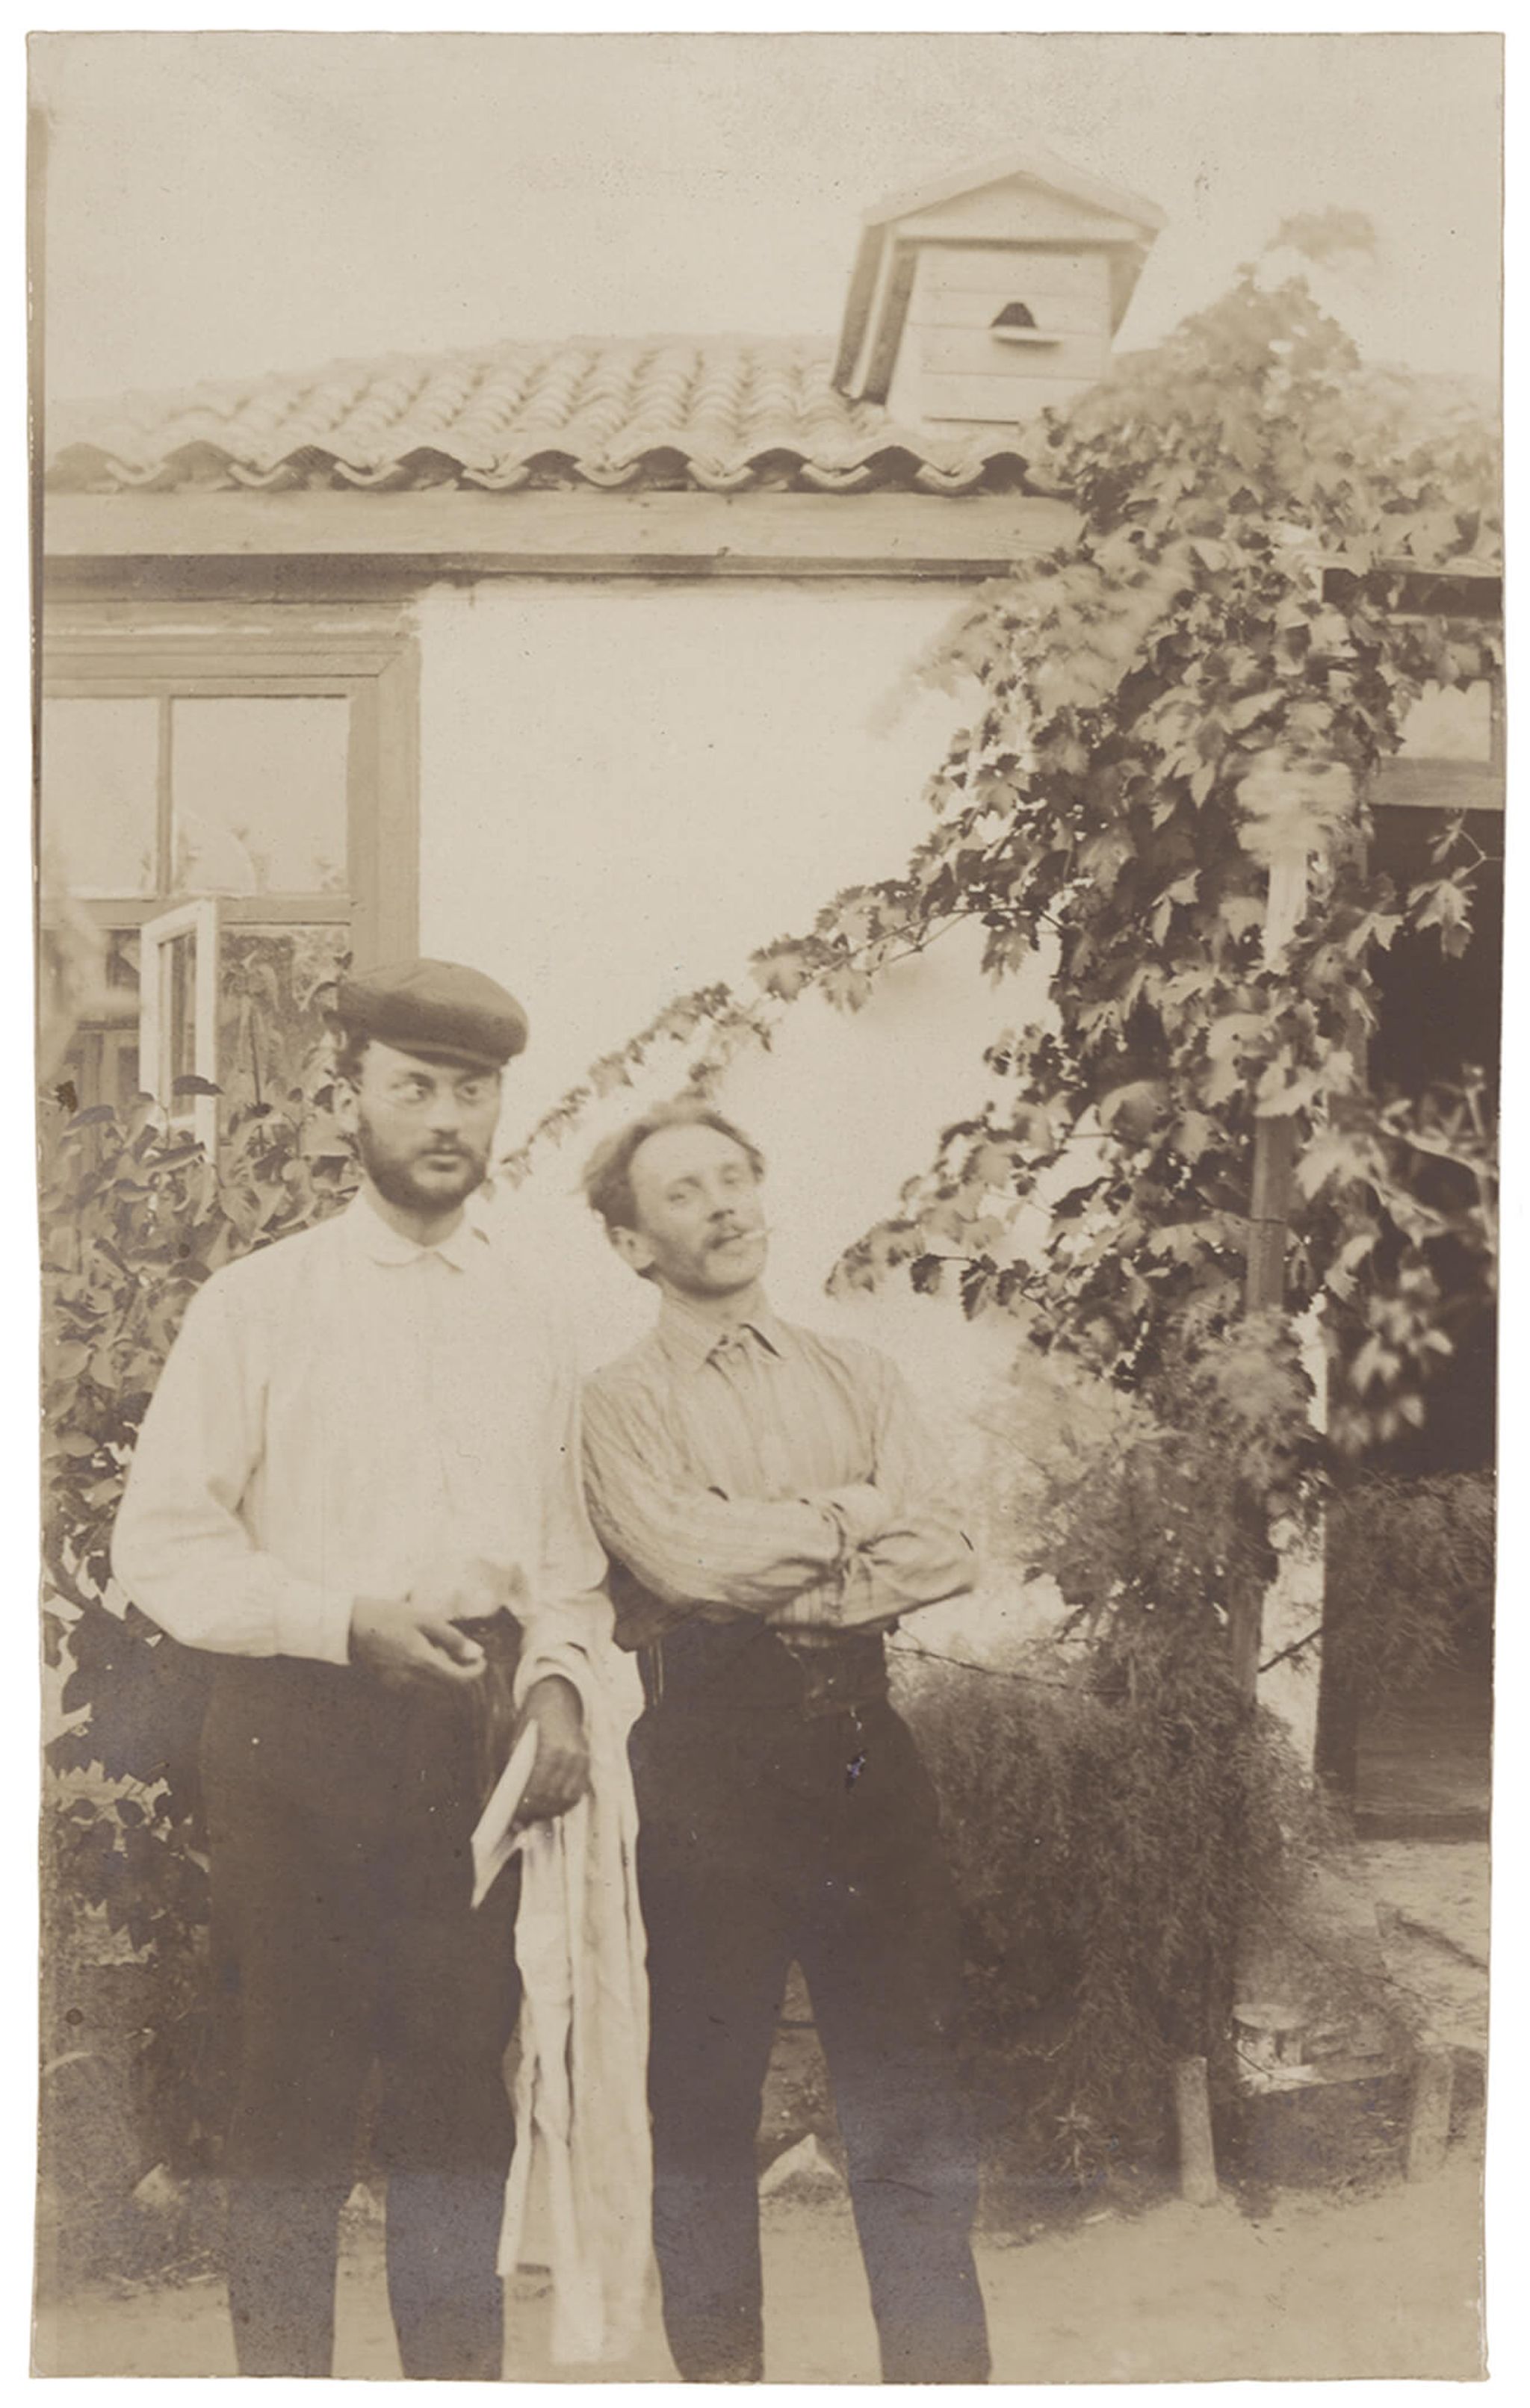 Image for: E. Morawski and M. K. Čiurlionis